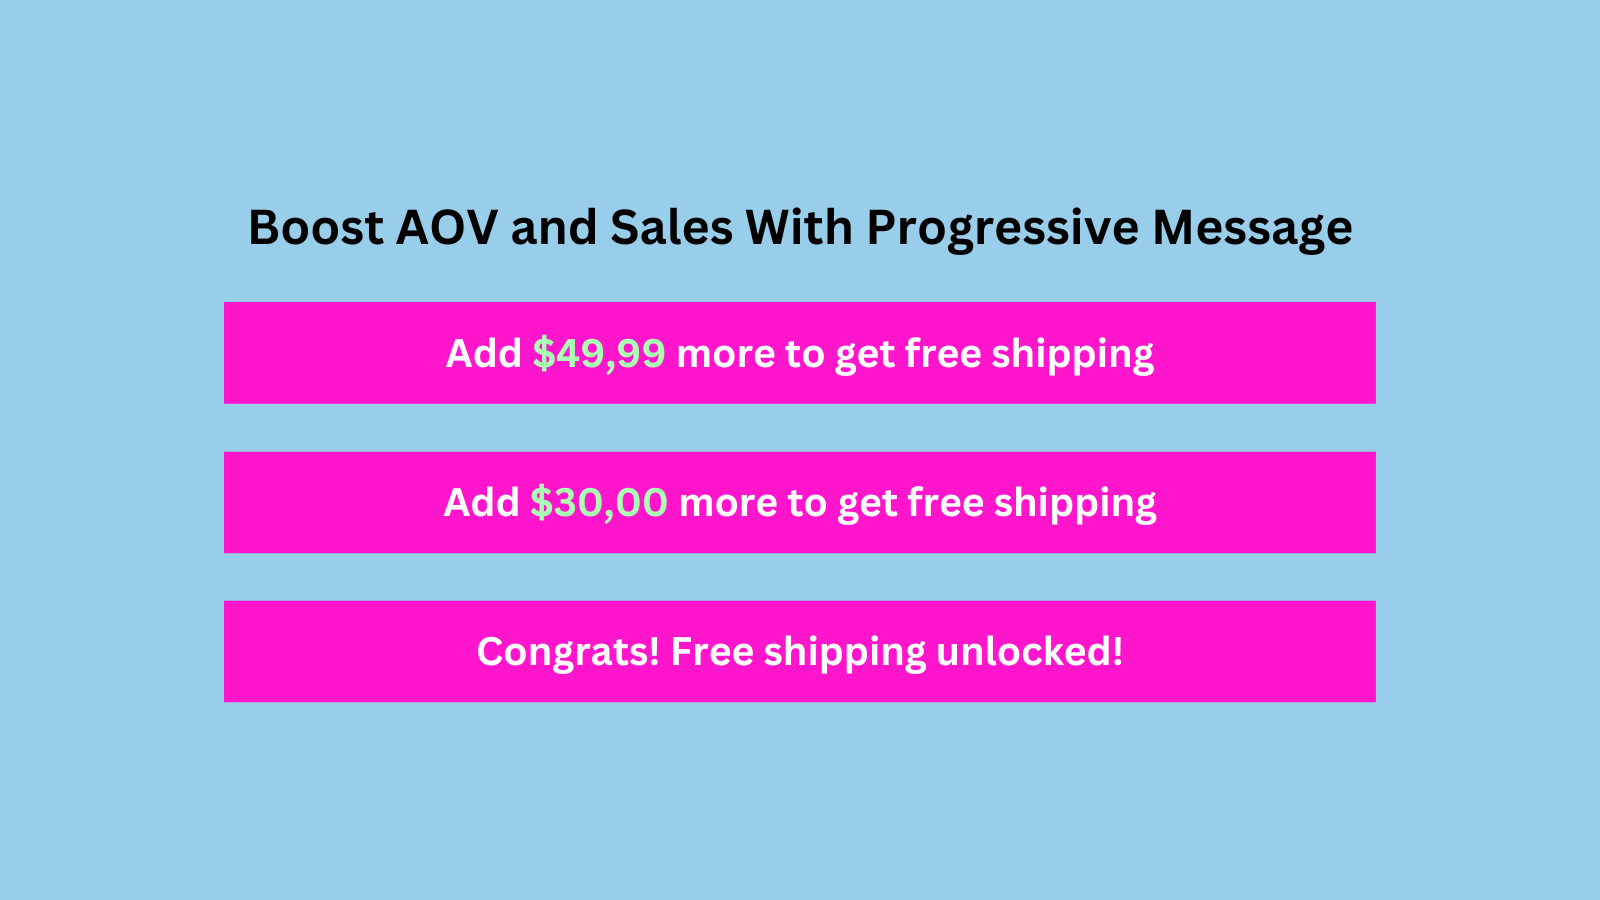 Progressive free shipping messaging